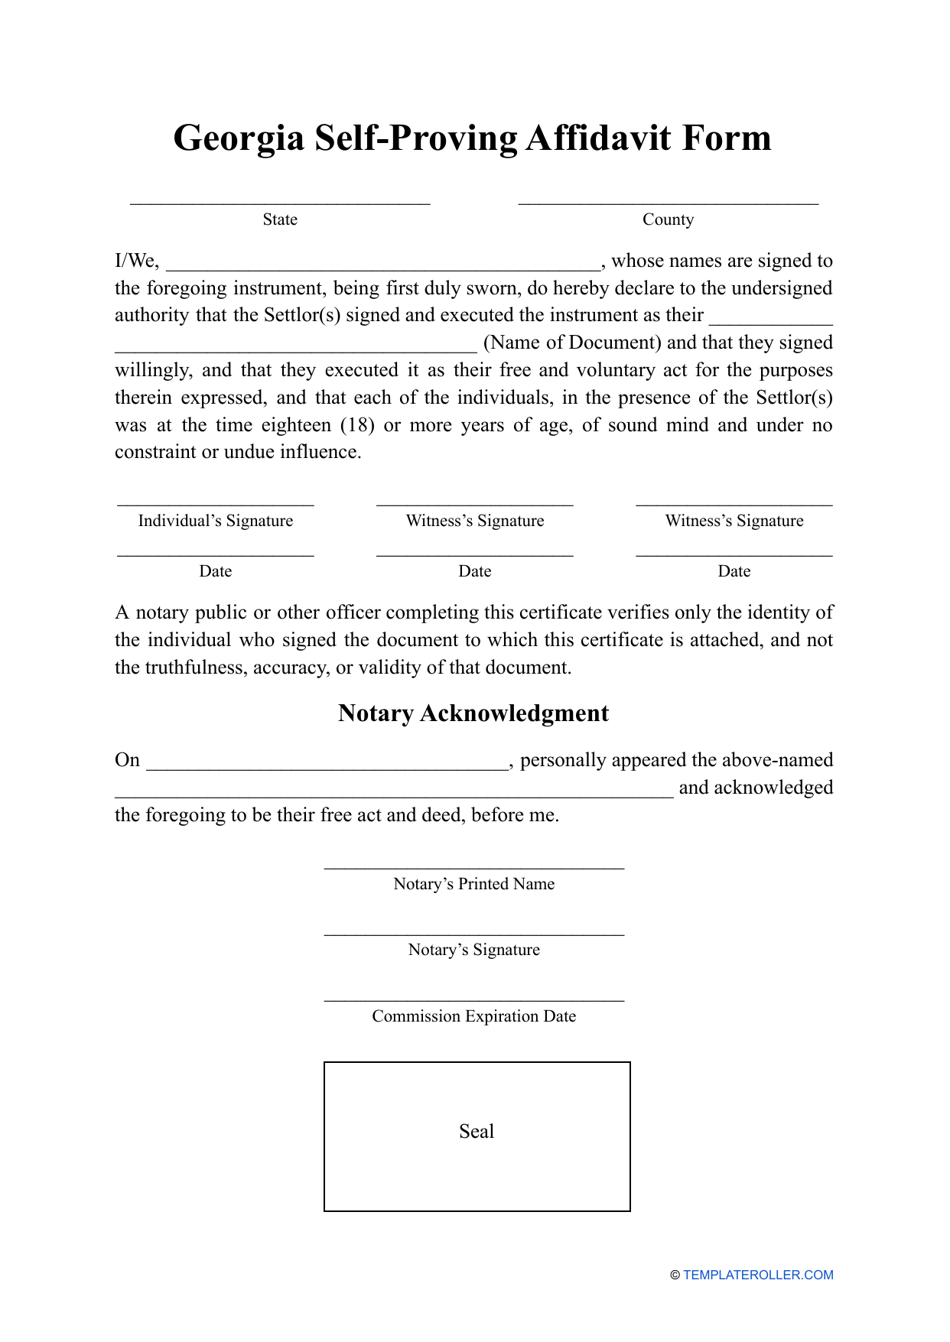 Self-proving Affidavit Form - Georgia (United States), Page 1